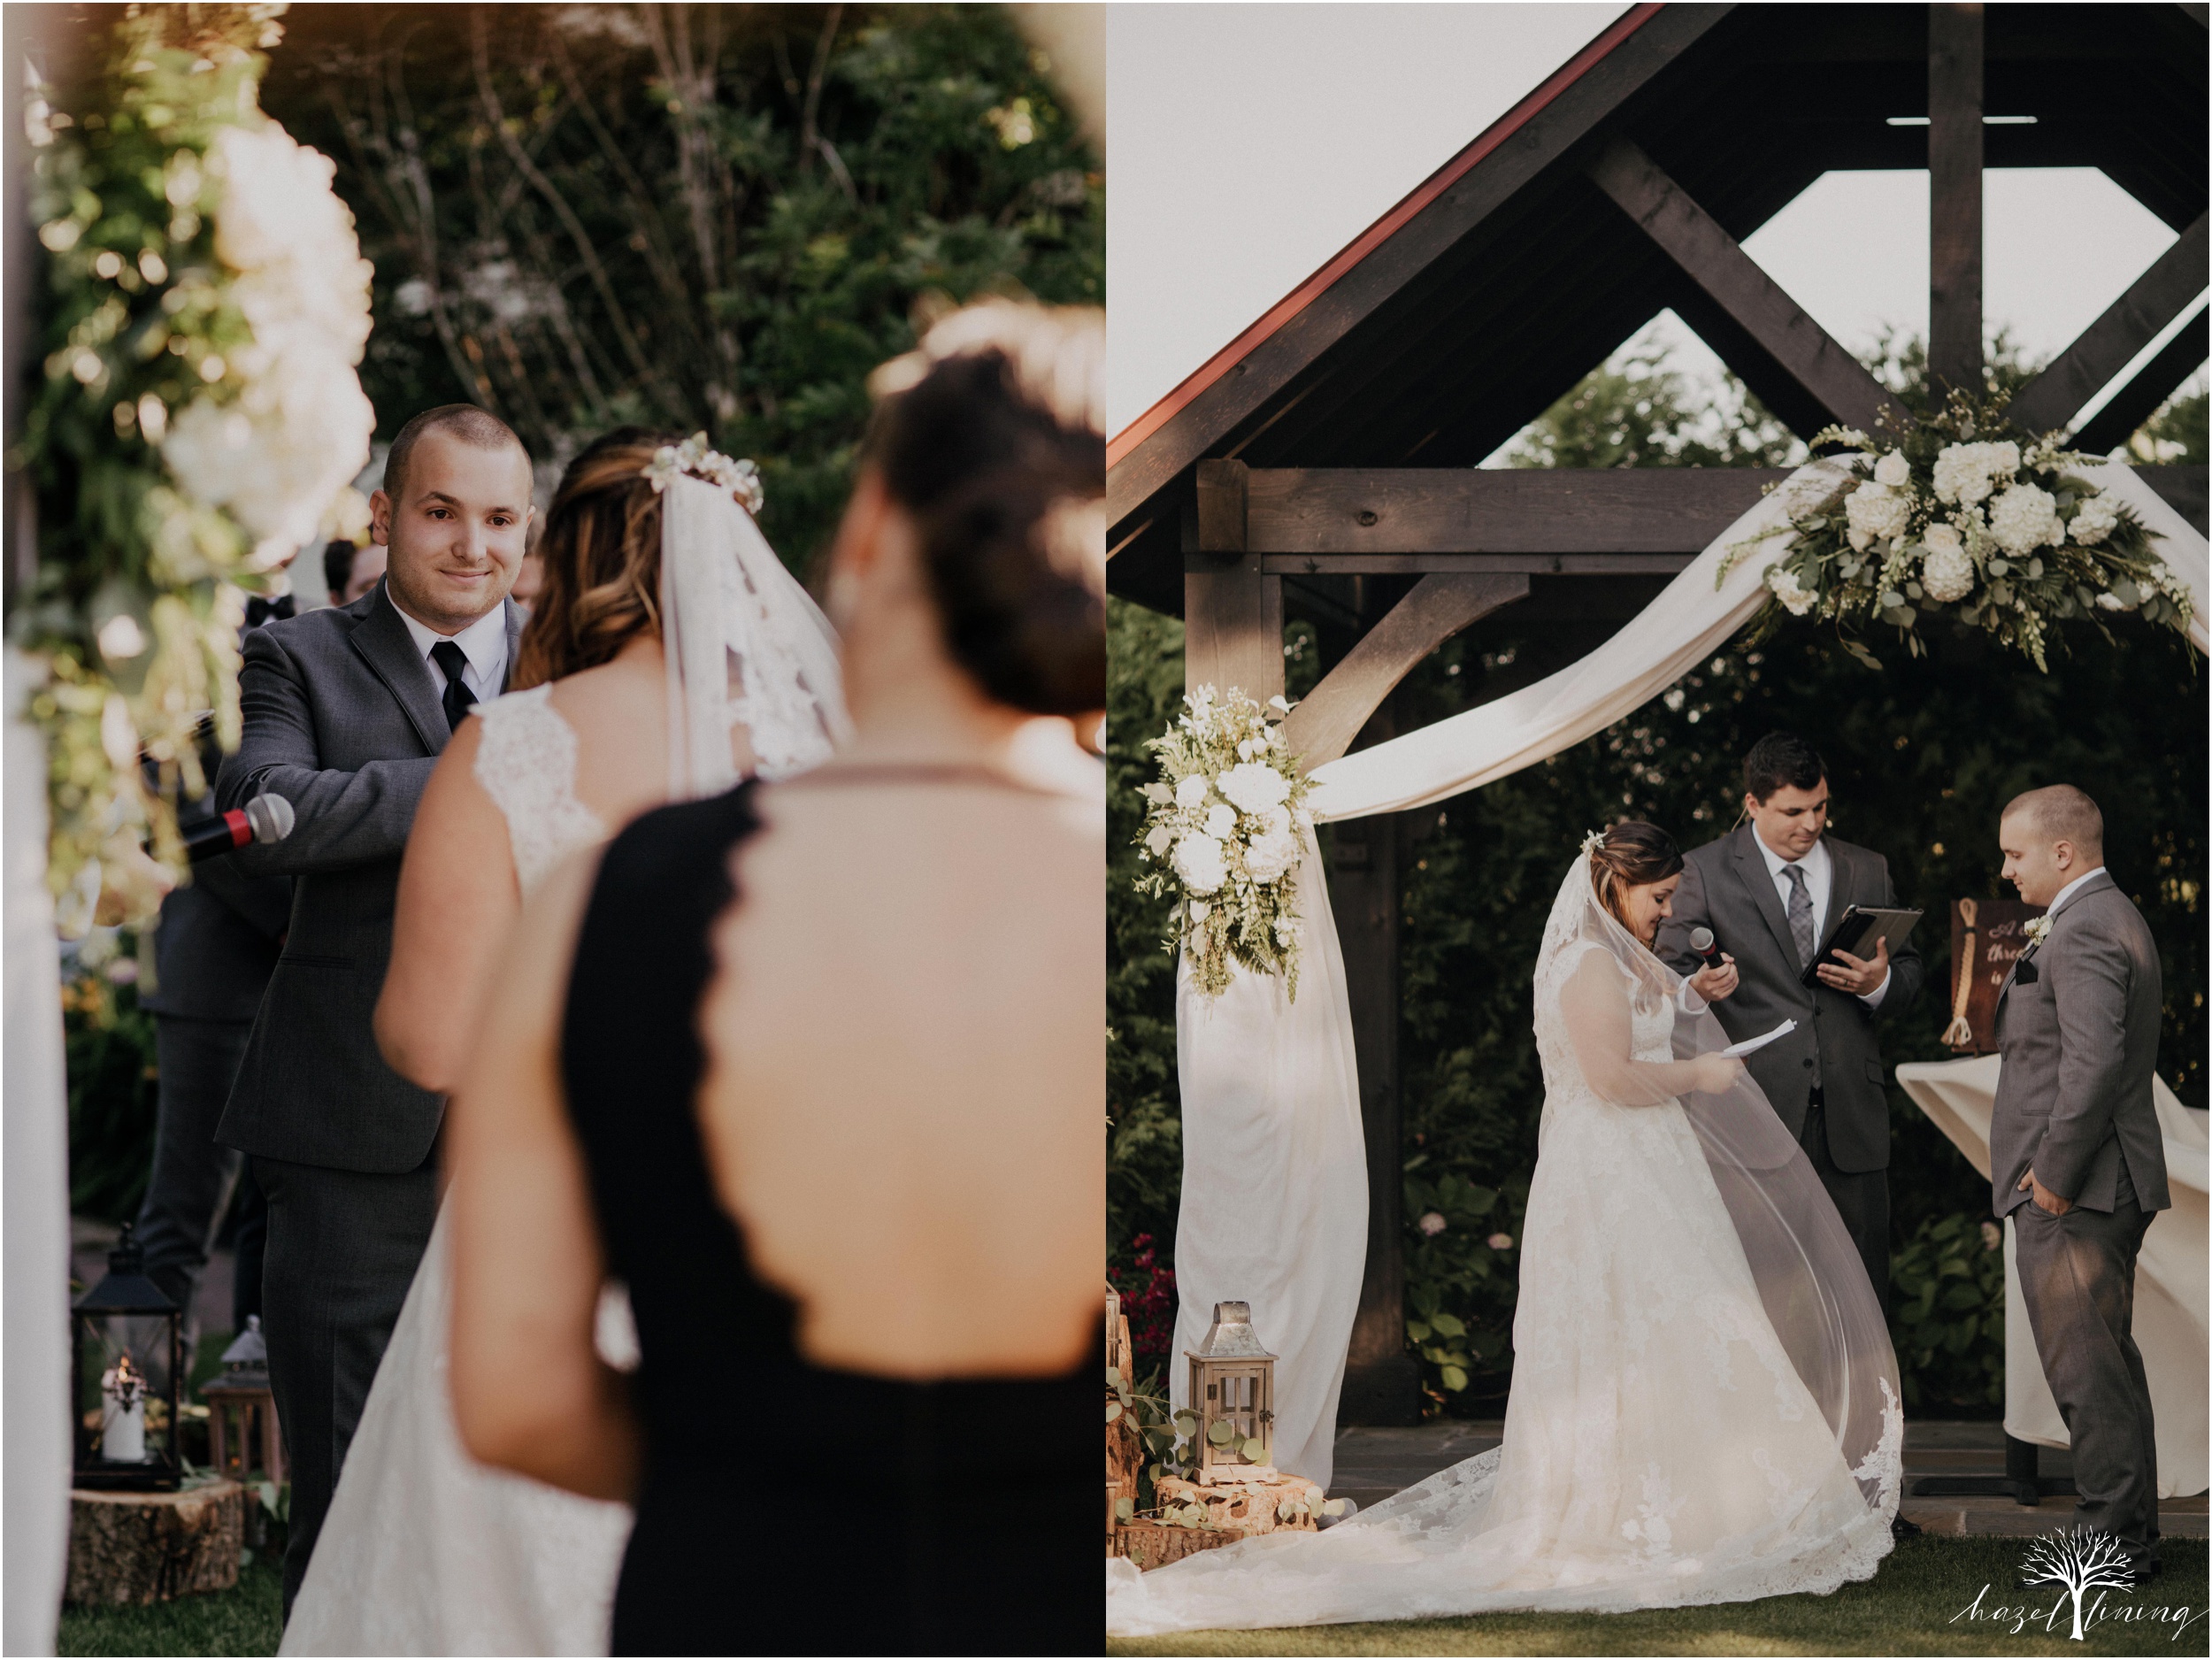 michaela-pagano-micah-bosico-normandy-farms-bluebell-pennsylvania-summer-wedding-hazel-lining-photography-destination-elopement-wedding-engagement-photography_0098.jpg